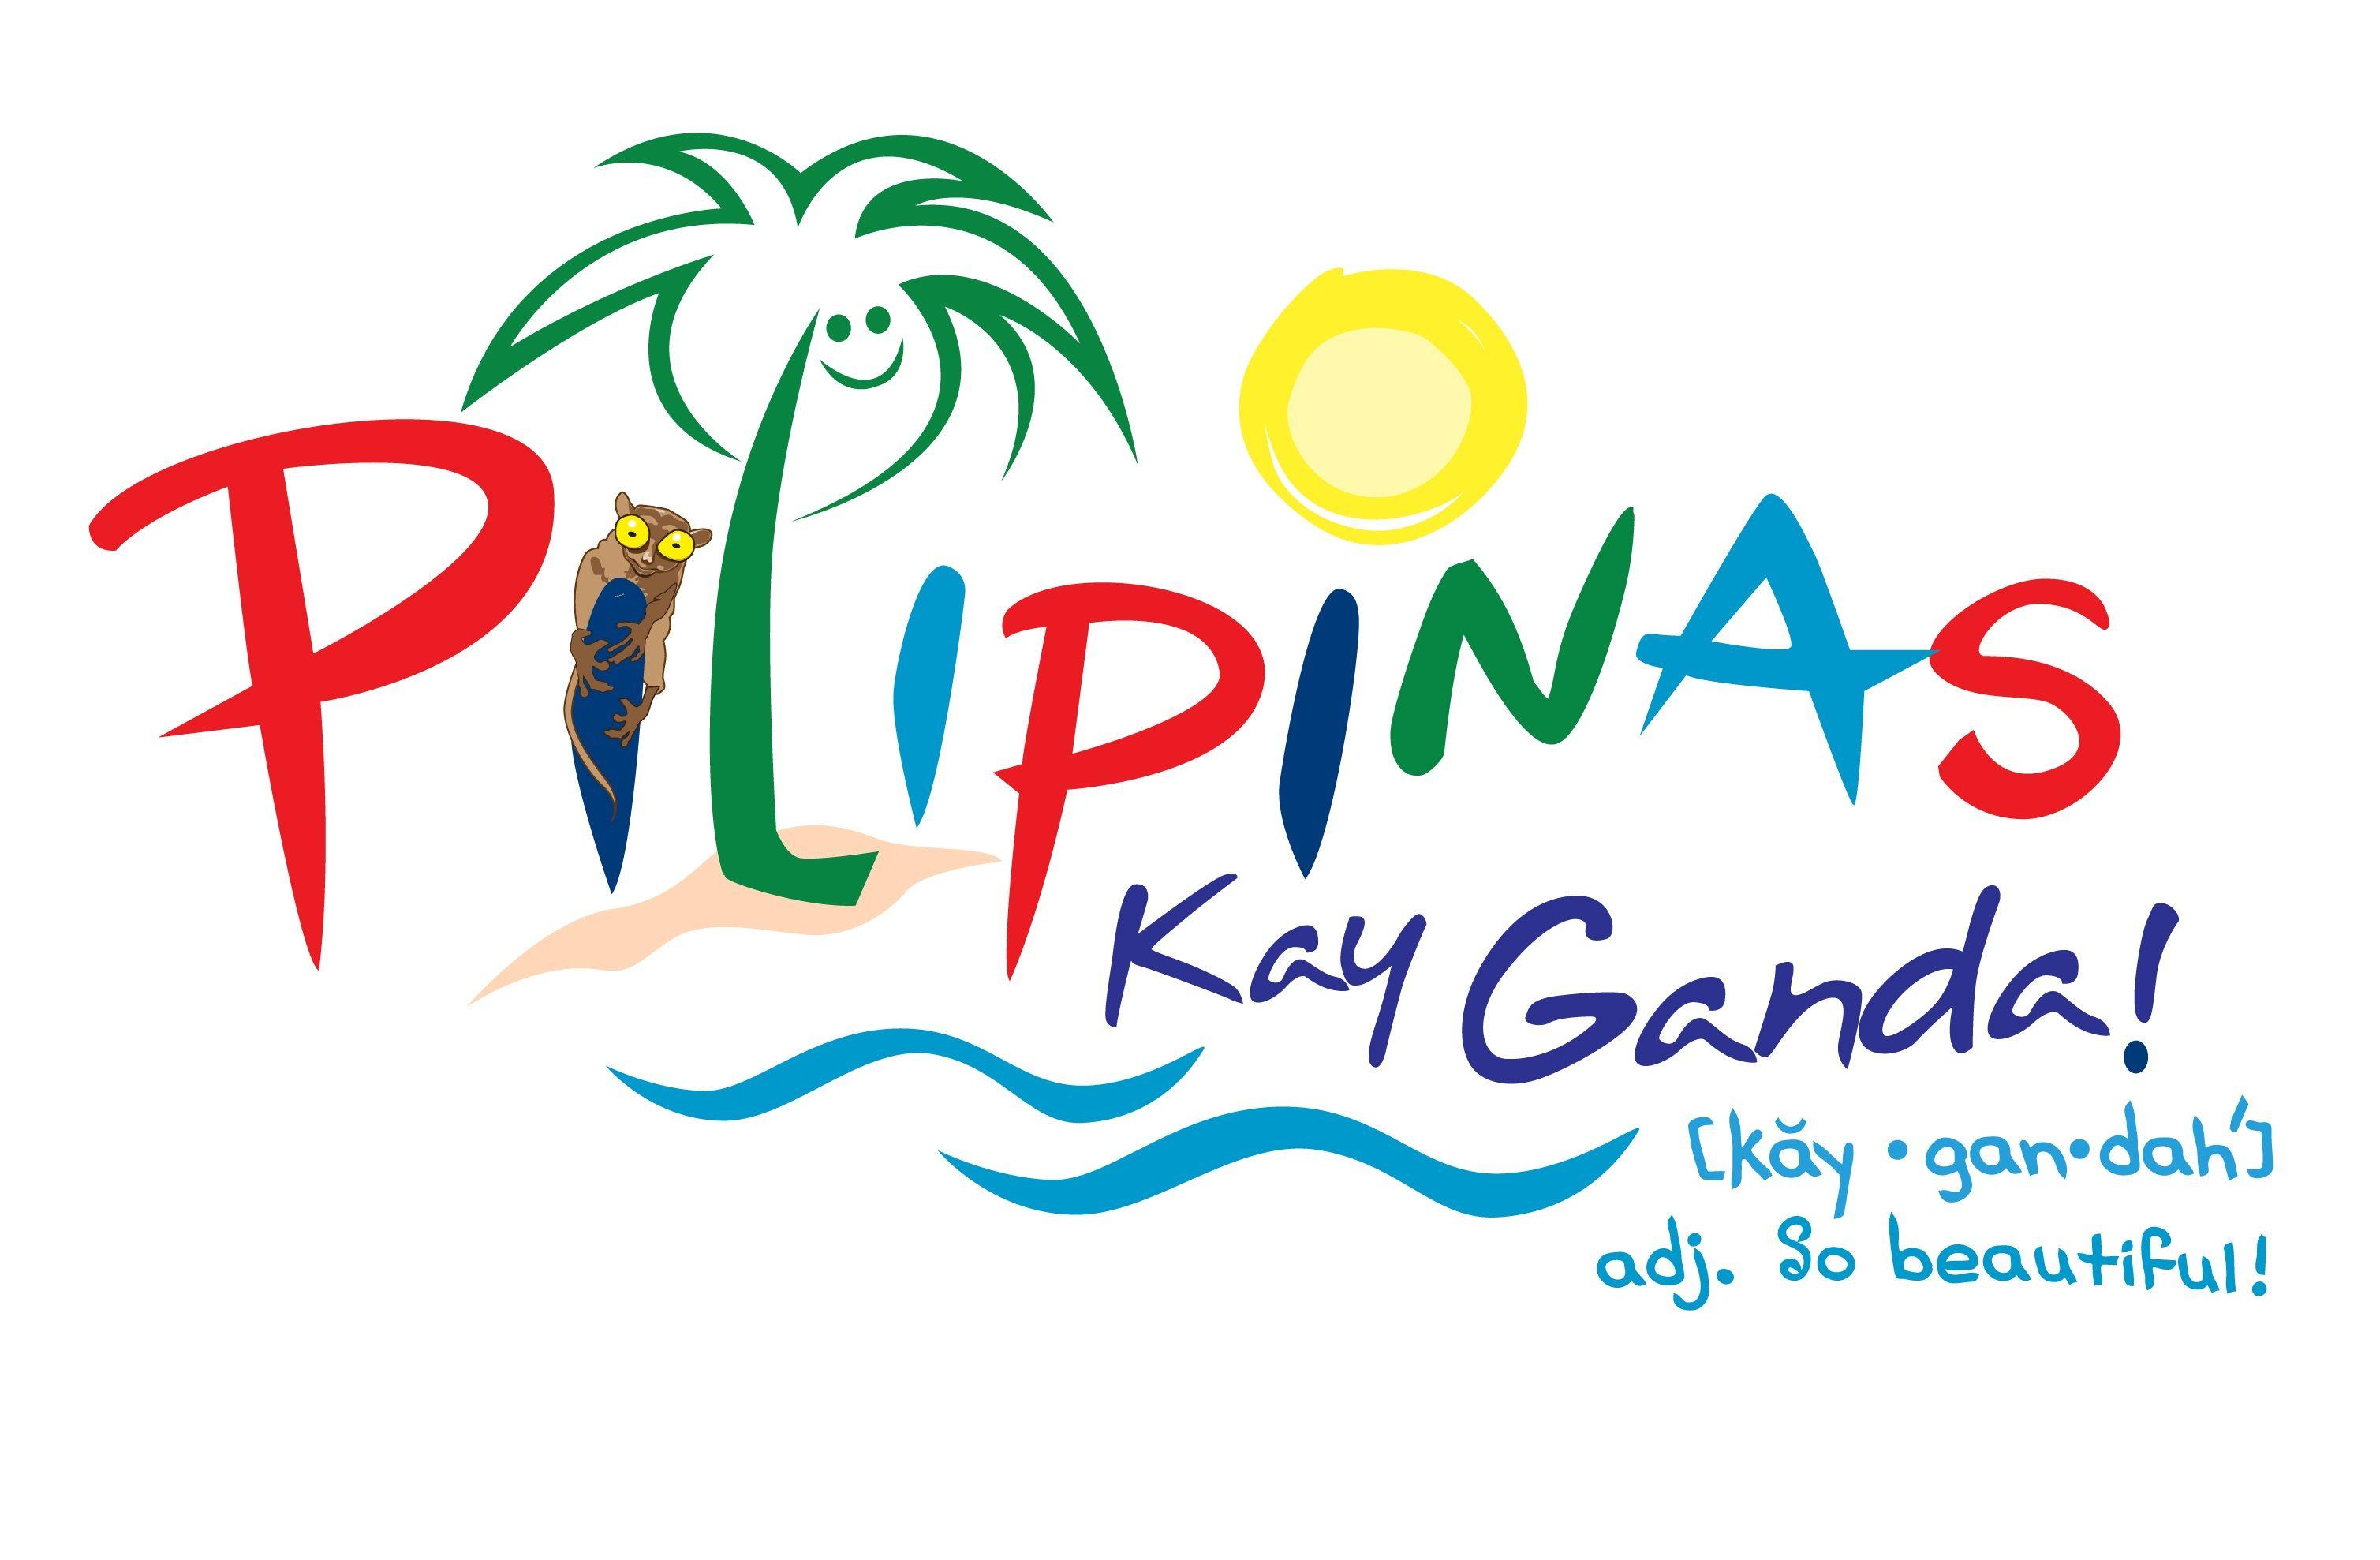 Philippines Logo - Pilipinas Kay Ganda: Philippines New Brand from the Department